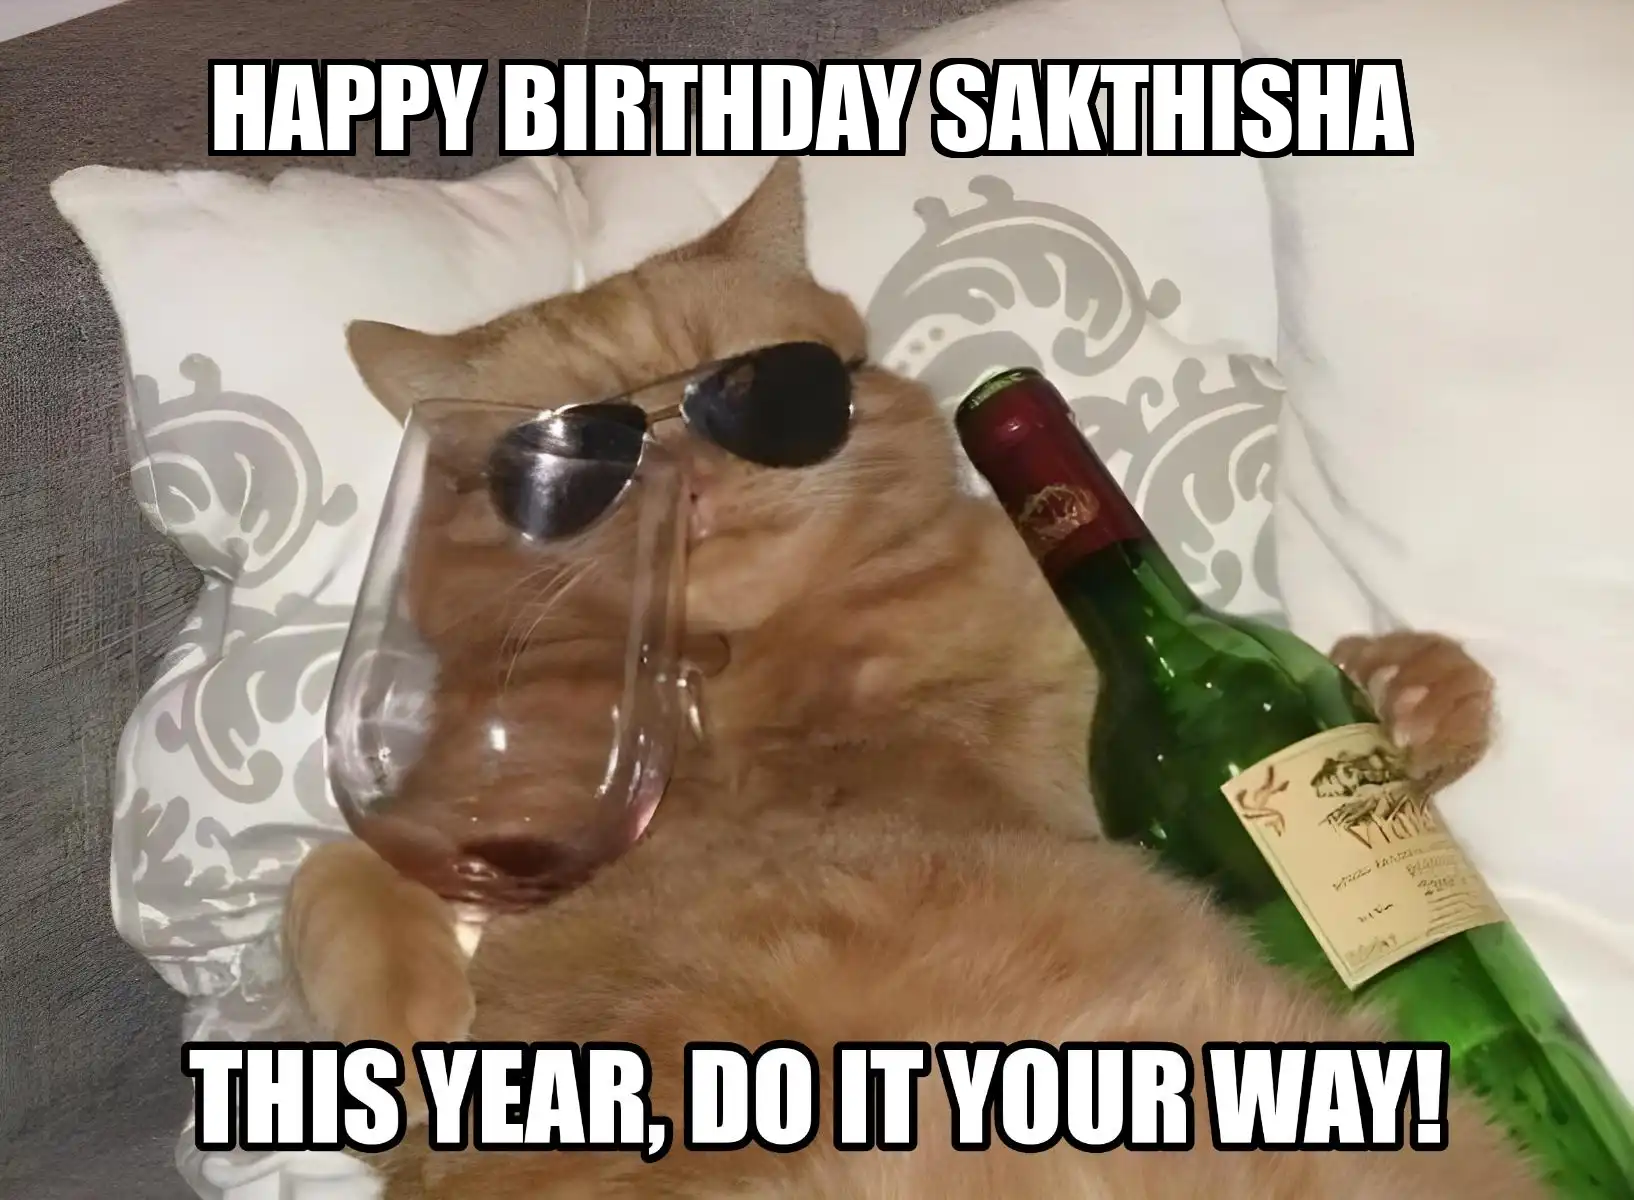 Happy Birthday Sakthisha This Year Do It Your Way Meme